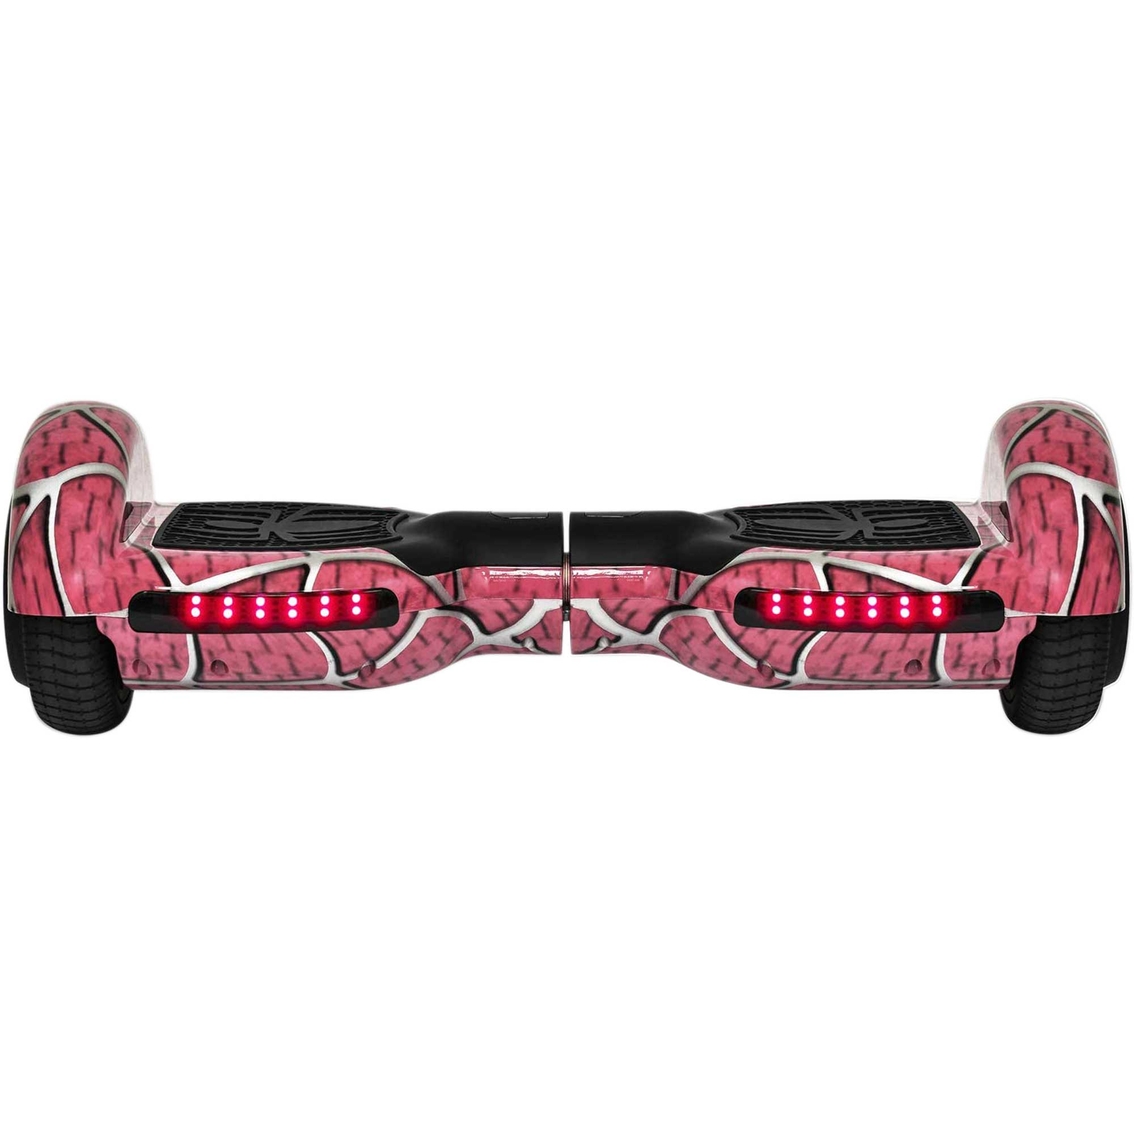 GlareWheel Pink Spider Built In Bluetooth Speaker Hoverboard - Image 3 of 6